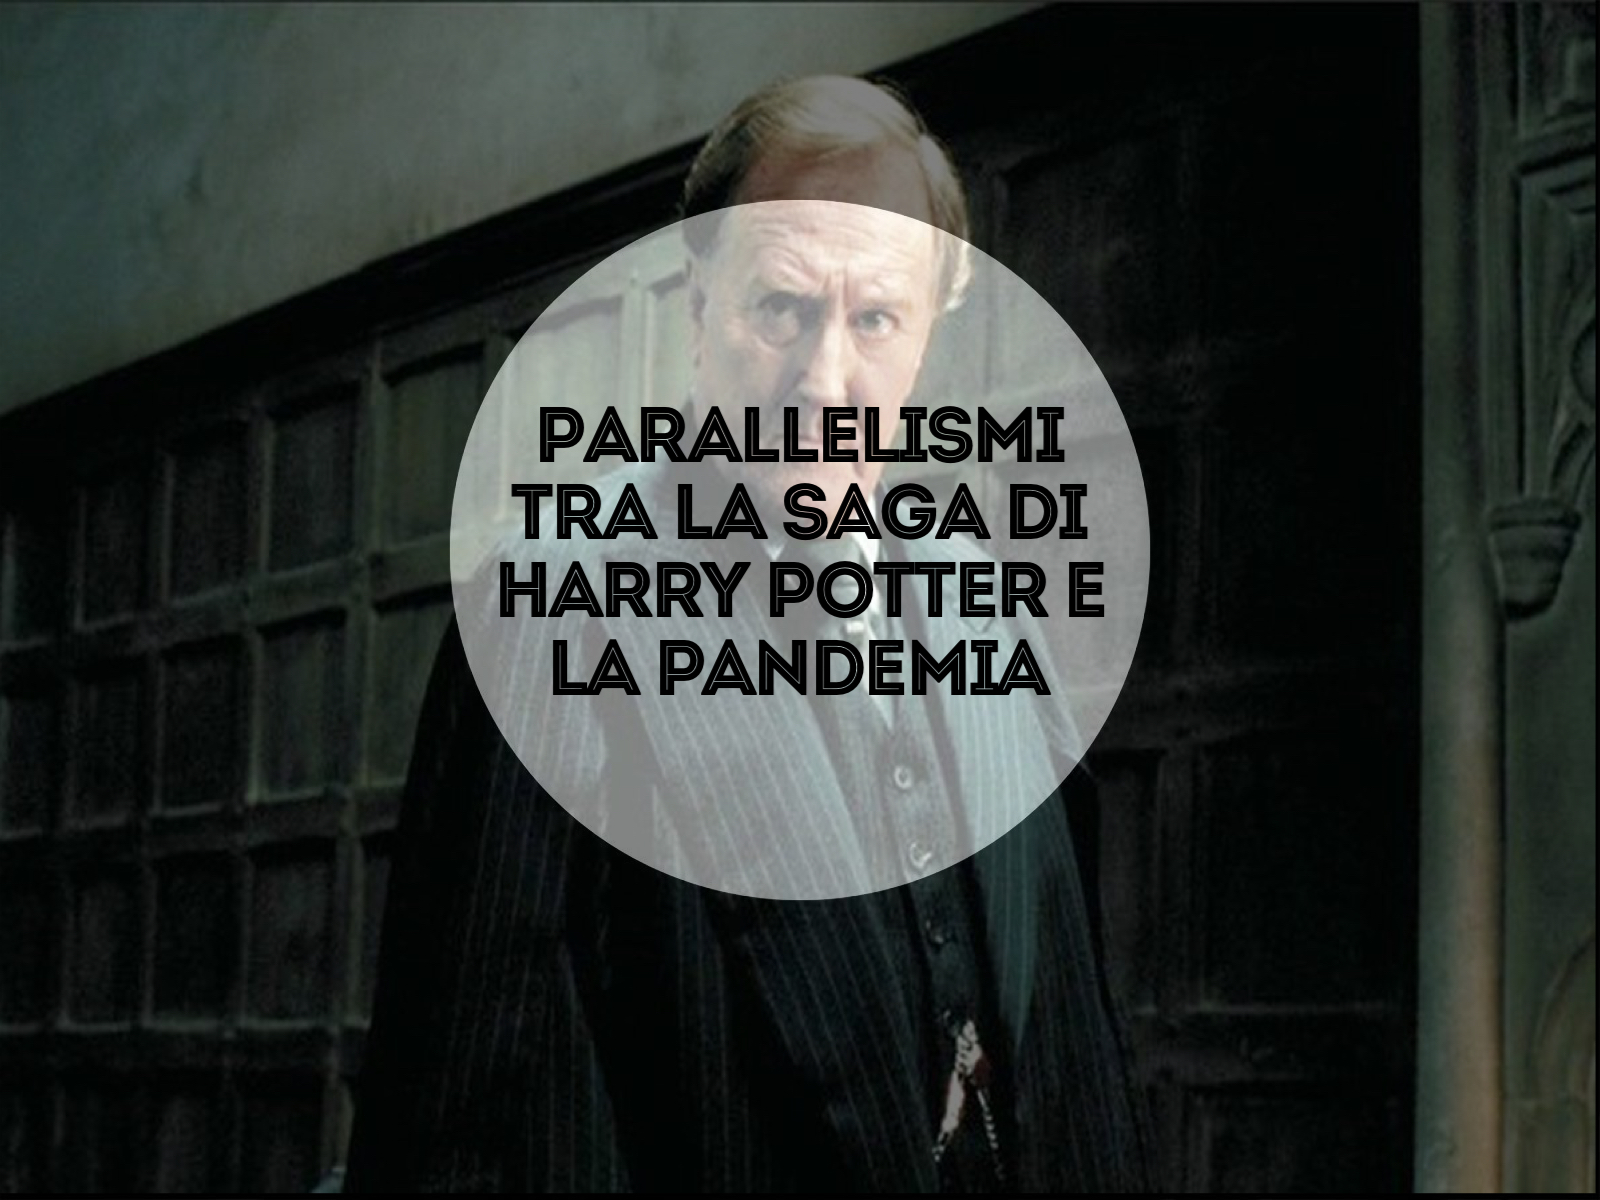 Harry Potter e la pandemia